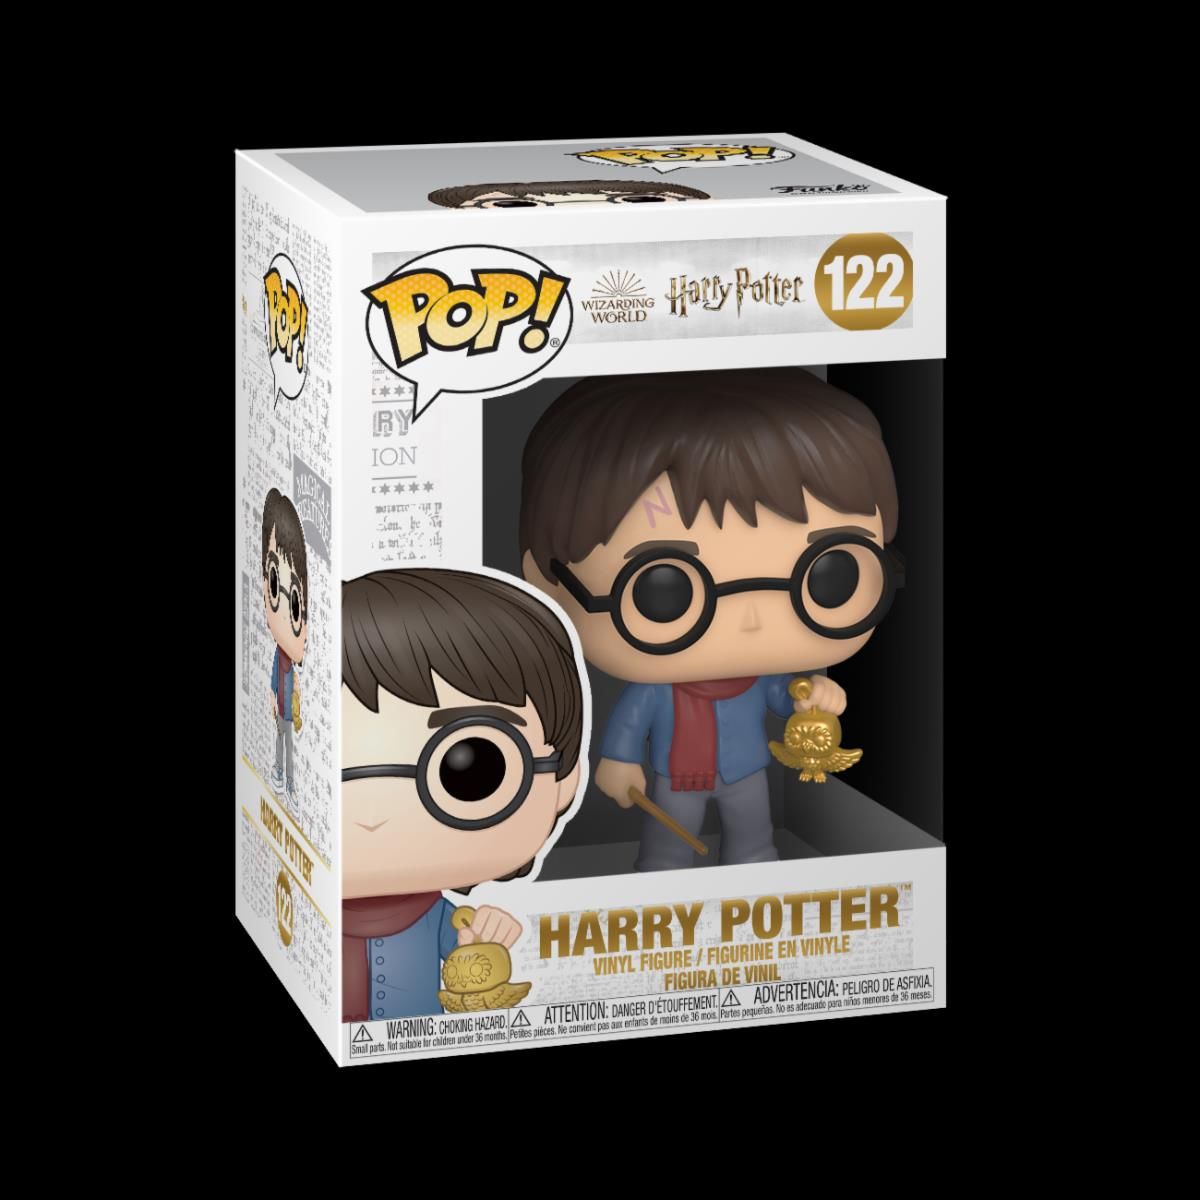 Acheter Plastoy - Porte-clef Harry Potter Chibi Harry Potter - Porte-Clef  prix promo neuf et occasion pas cher